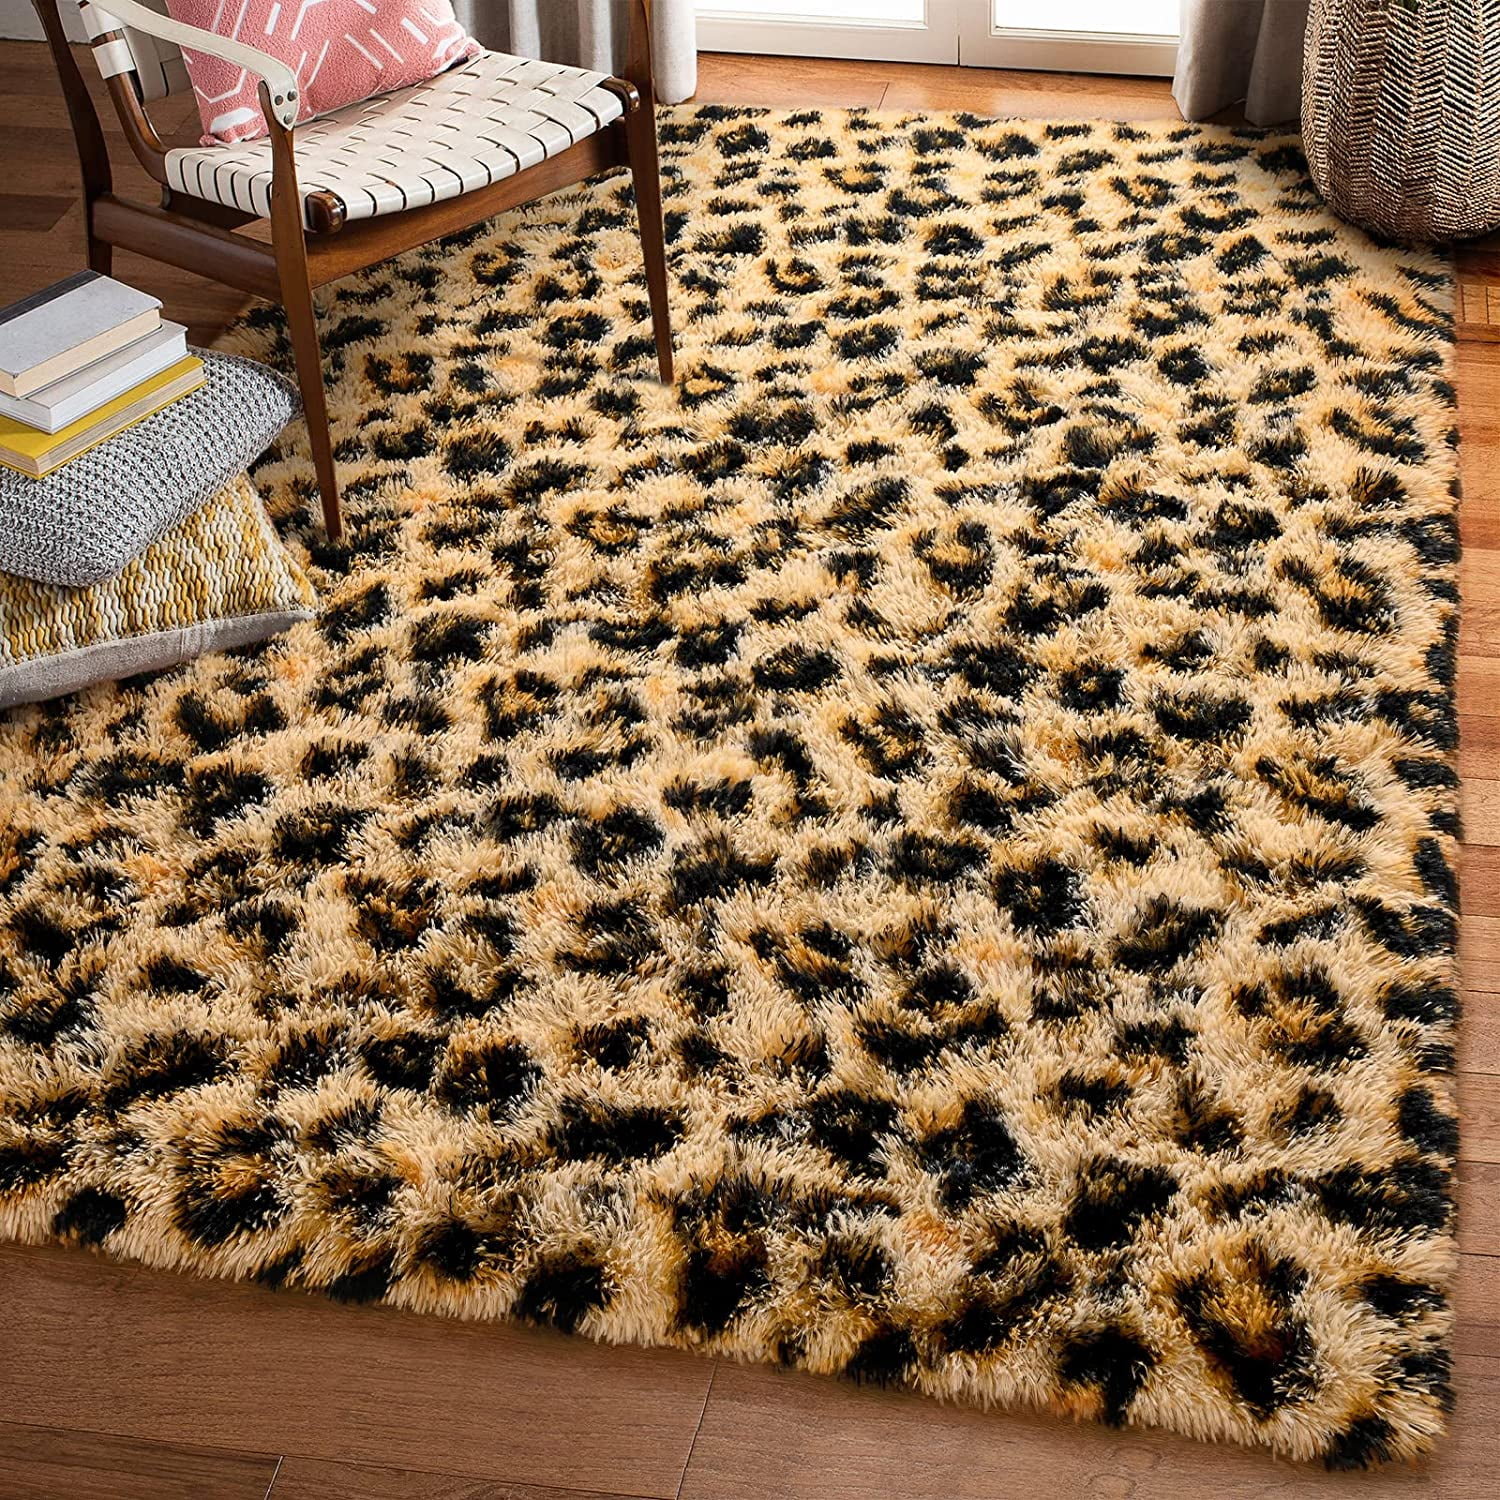 Fashionable and durable Fluffy Leopard Print Rug, Premium Cheetah Print  Area Rugs, Soft Comfy Faux Fur Animal Printed Carpet 